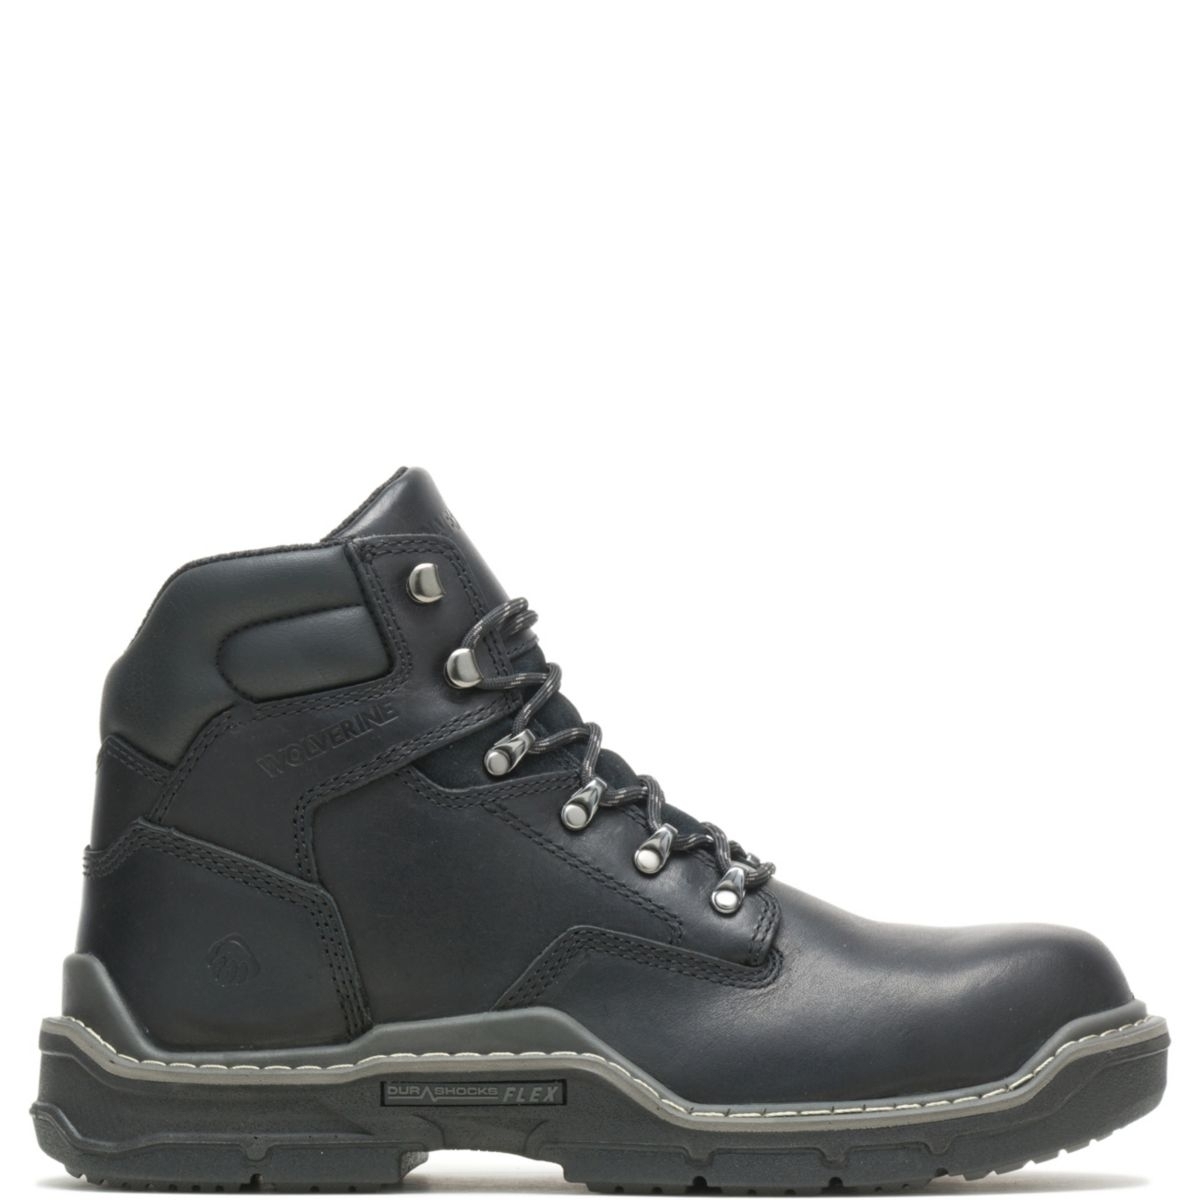 WOLVERINE Men's Raider 6 DuraShocksÂ® CarbonMAXÂ® Composite Toe Work Boot Black - W211100 BLACK - BLACK, 8.5